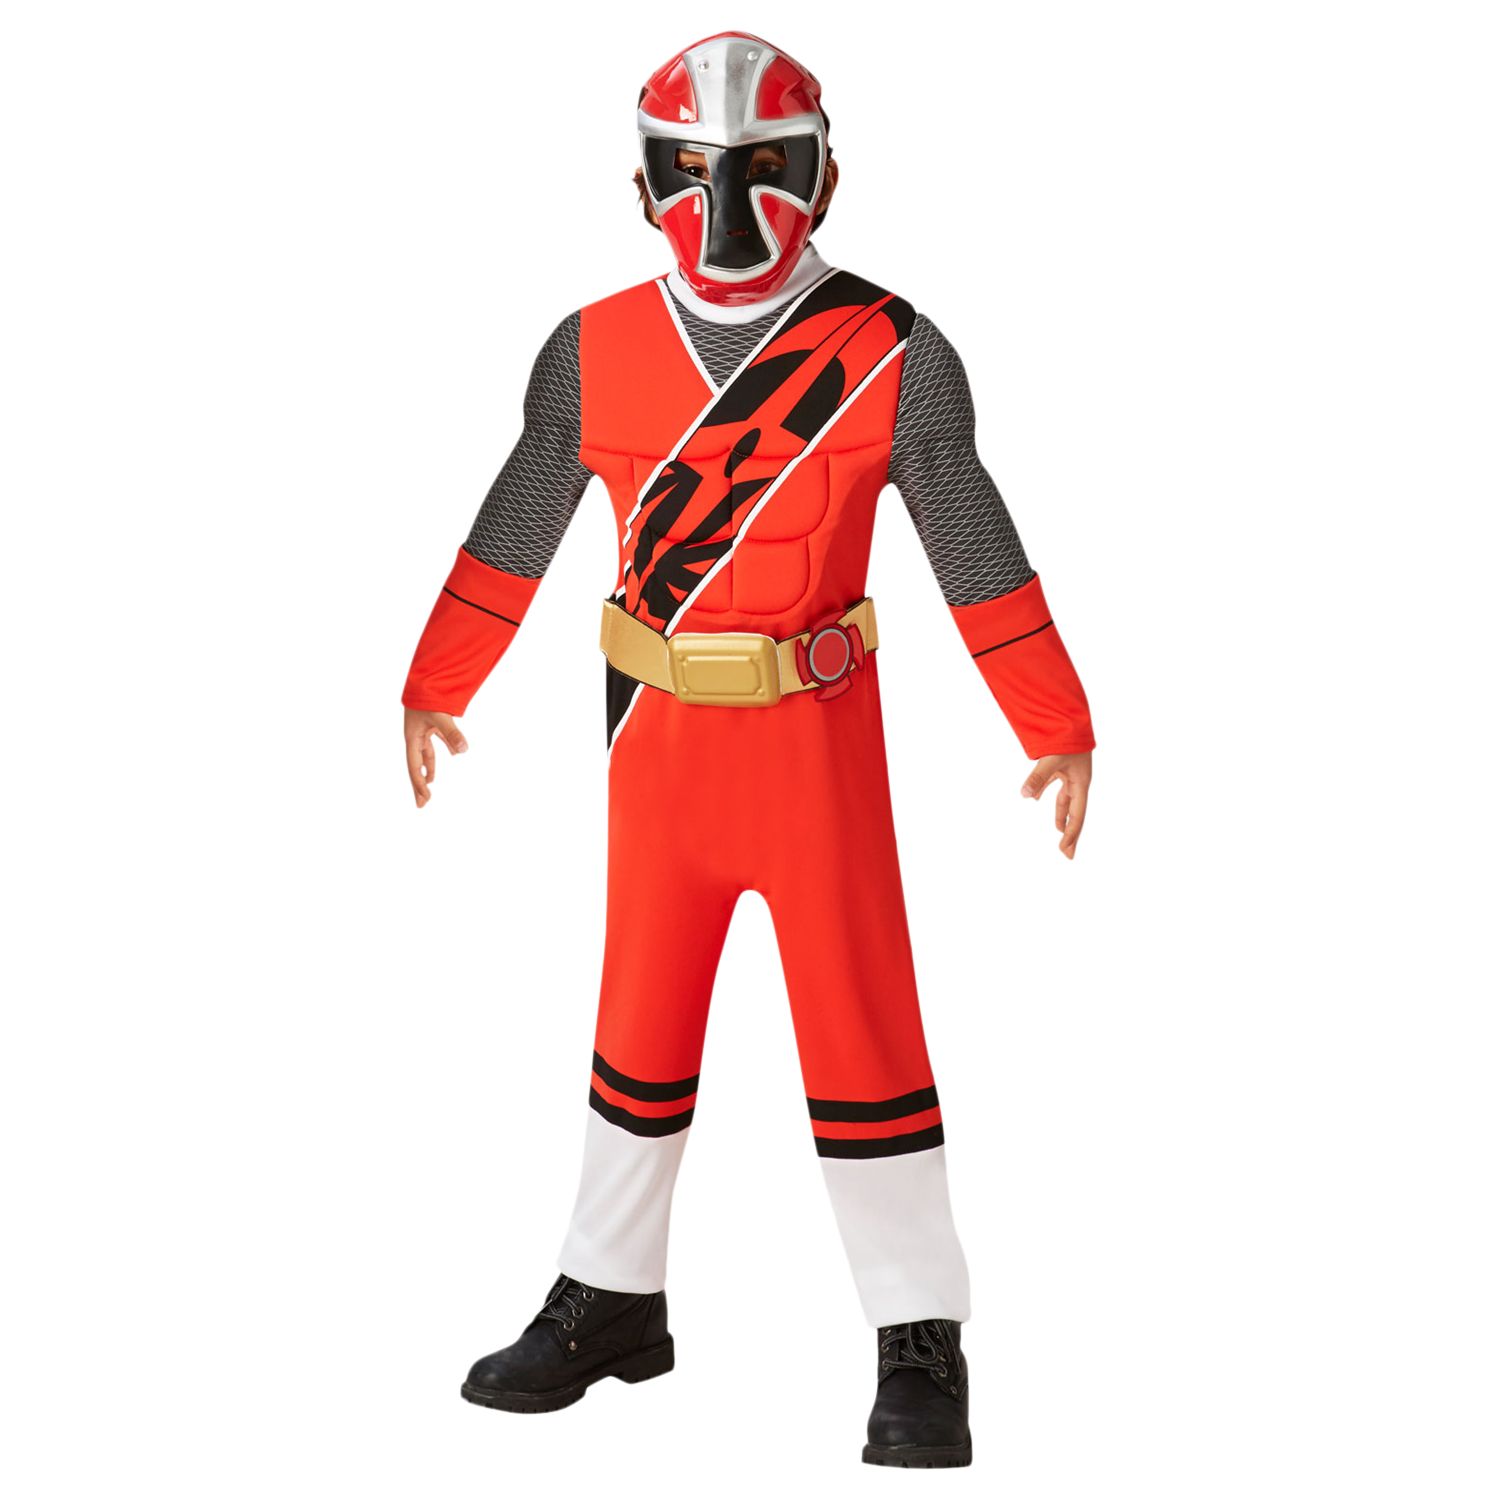 Power Ranger Red Children's Costume, 5-6 years at John Lewis & Partners